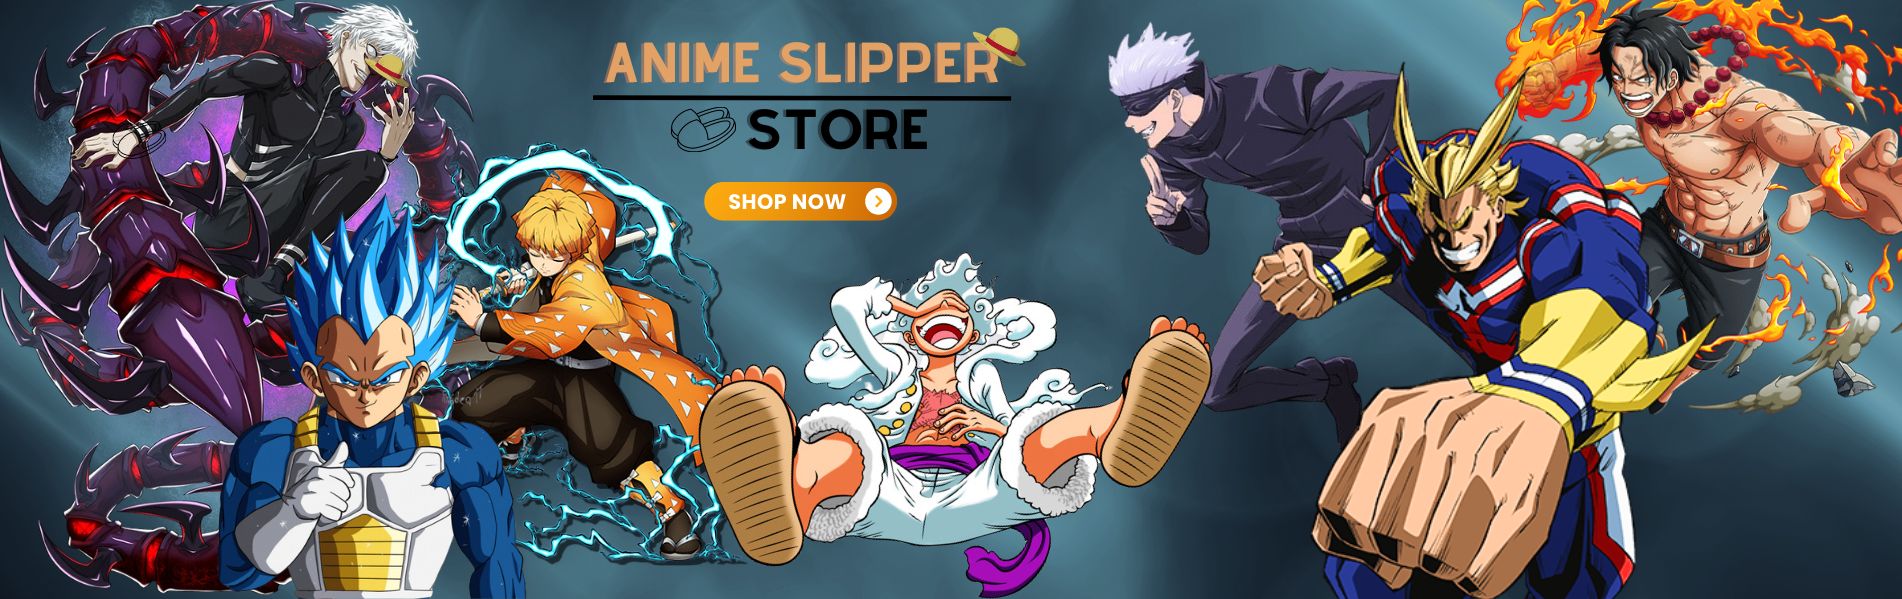 Anime Slippers Store Banner